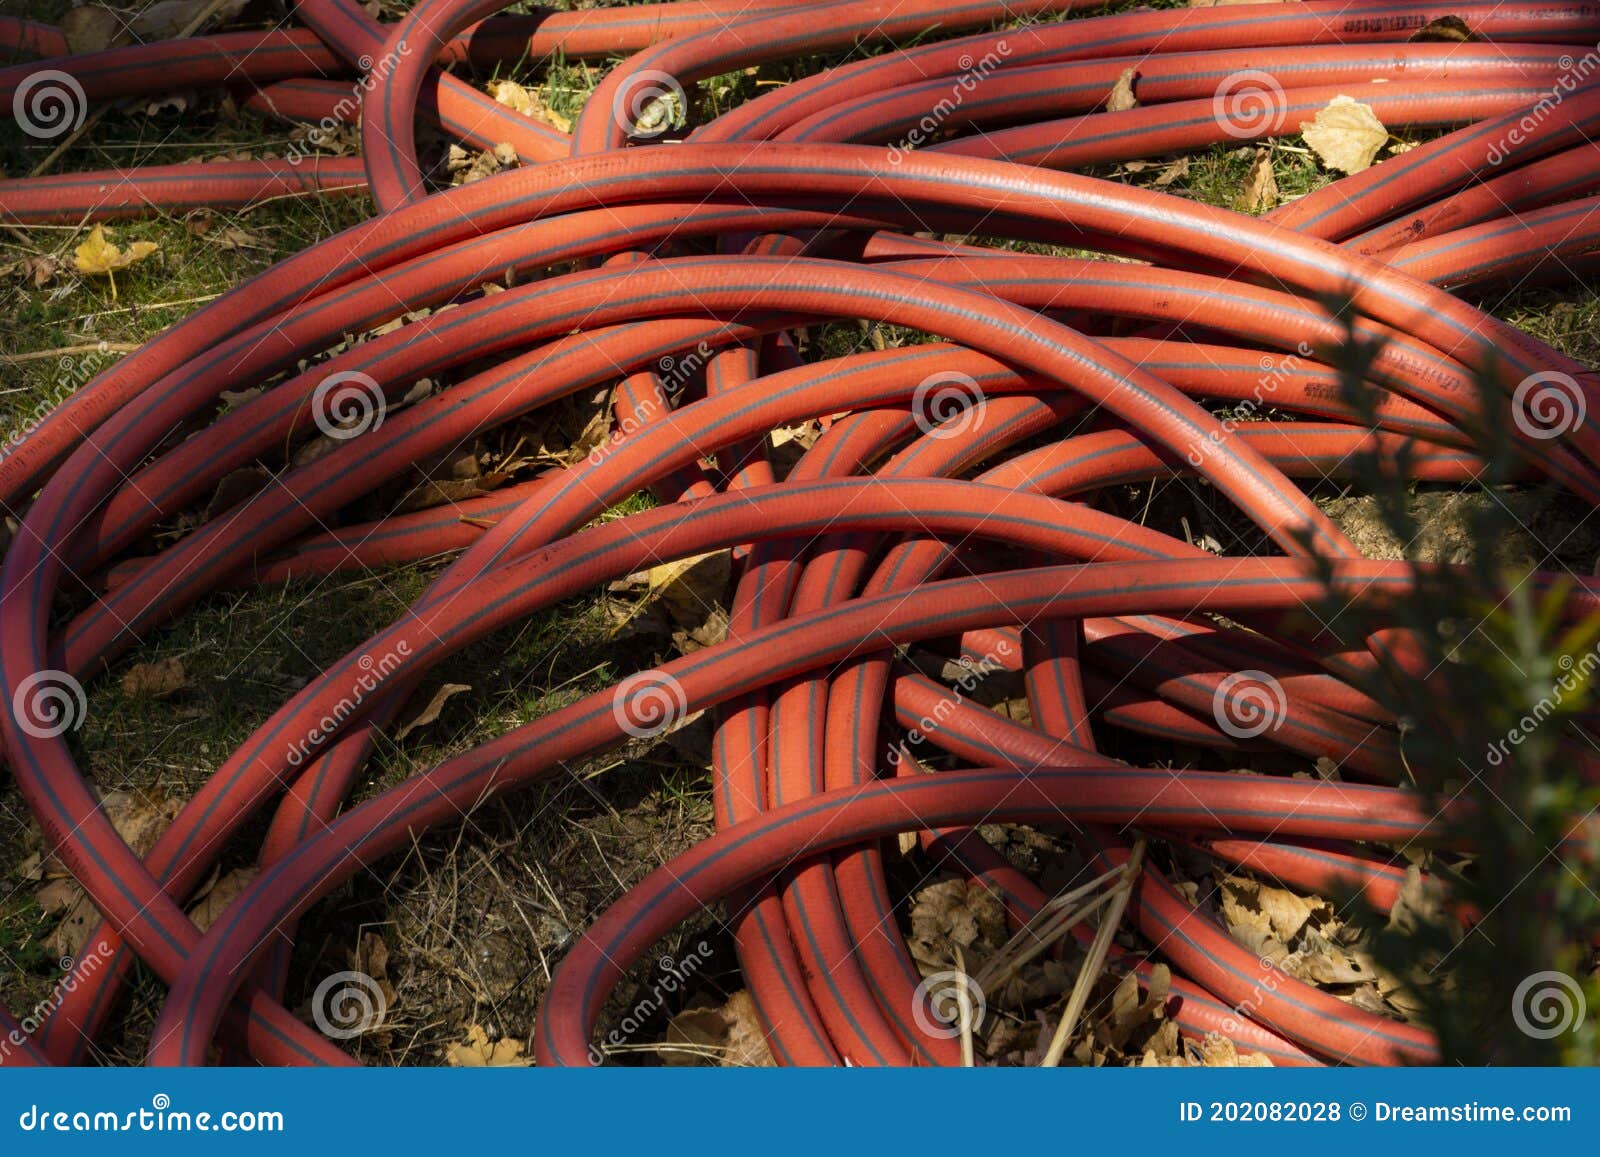 close up red irrigation hose